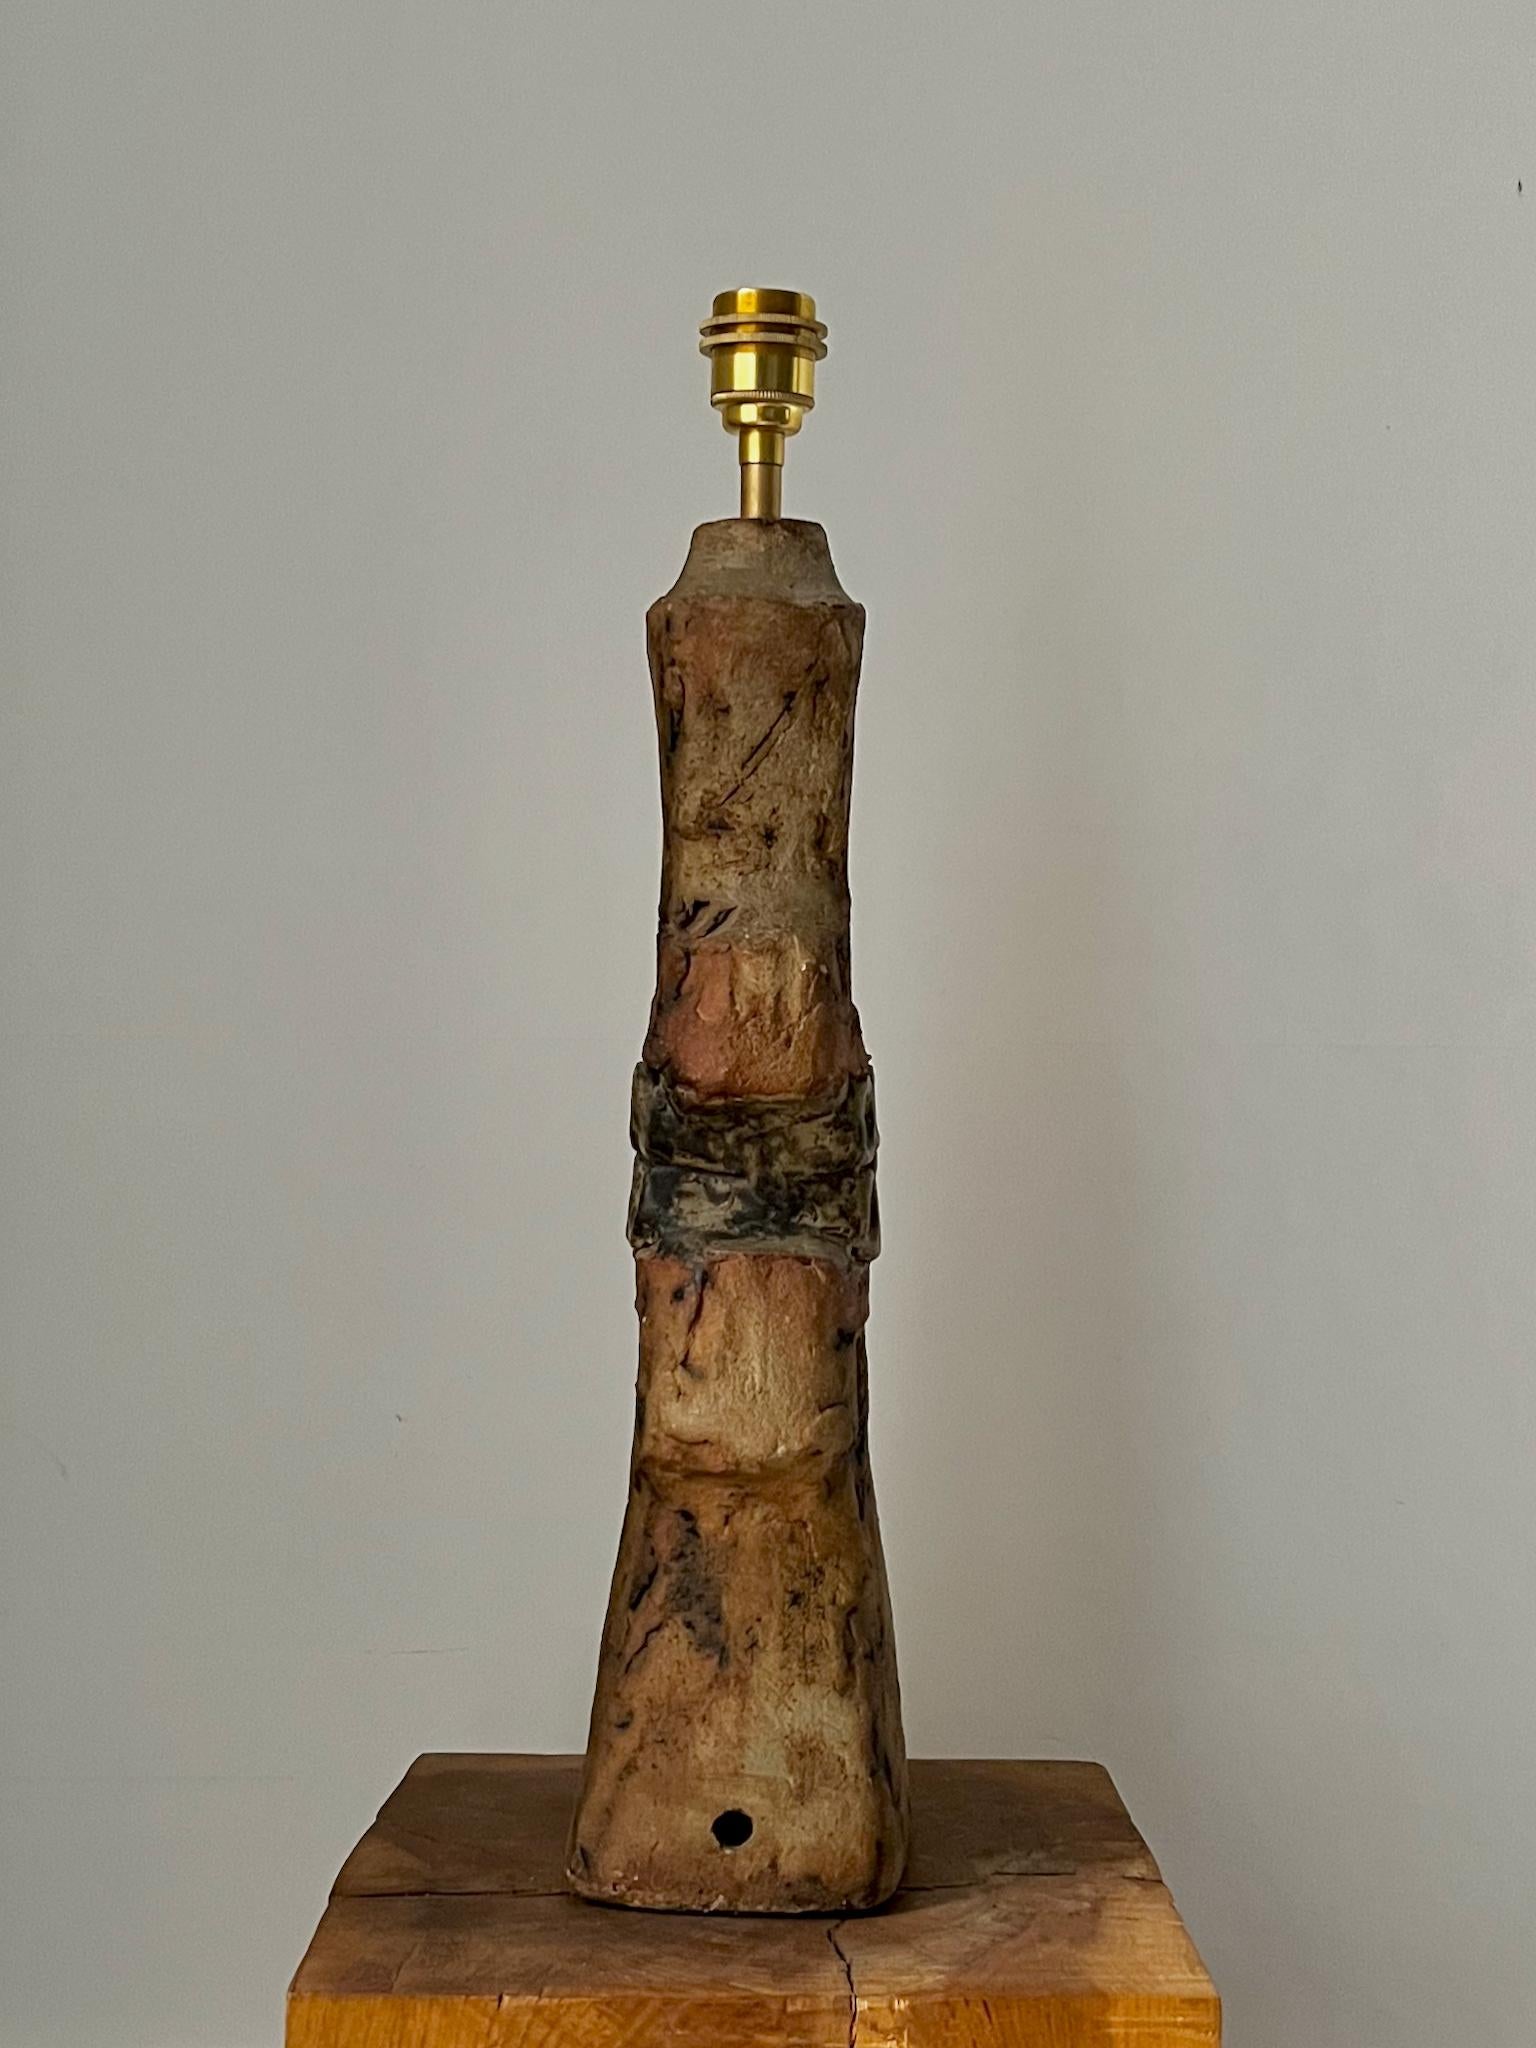 Metal Studio Ceramic Lamp in Natural Tones by Bernard Rooke, Mid-20th Century England For Sale